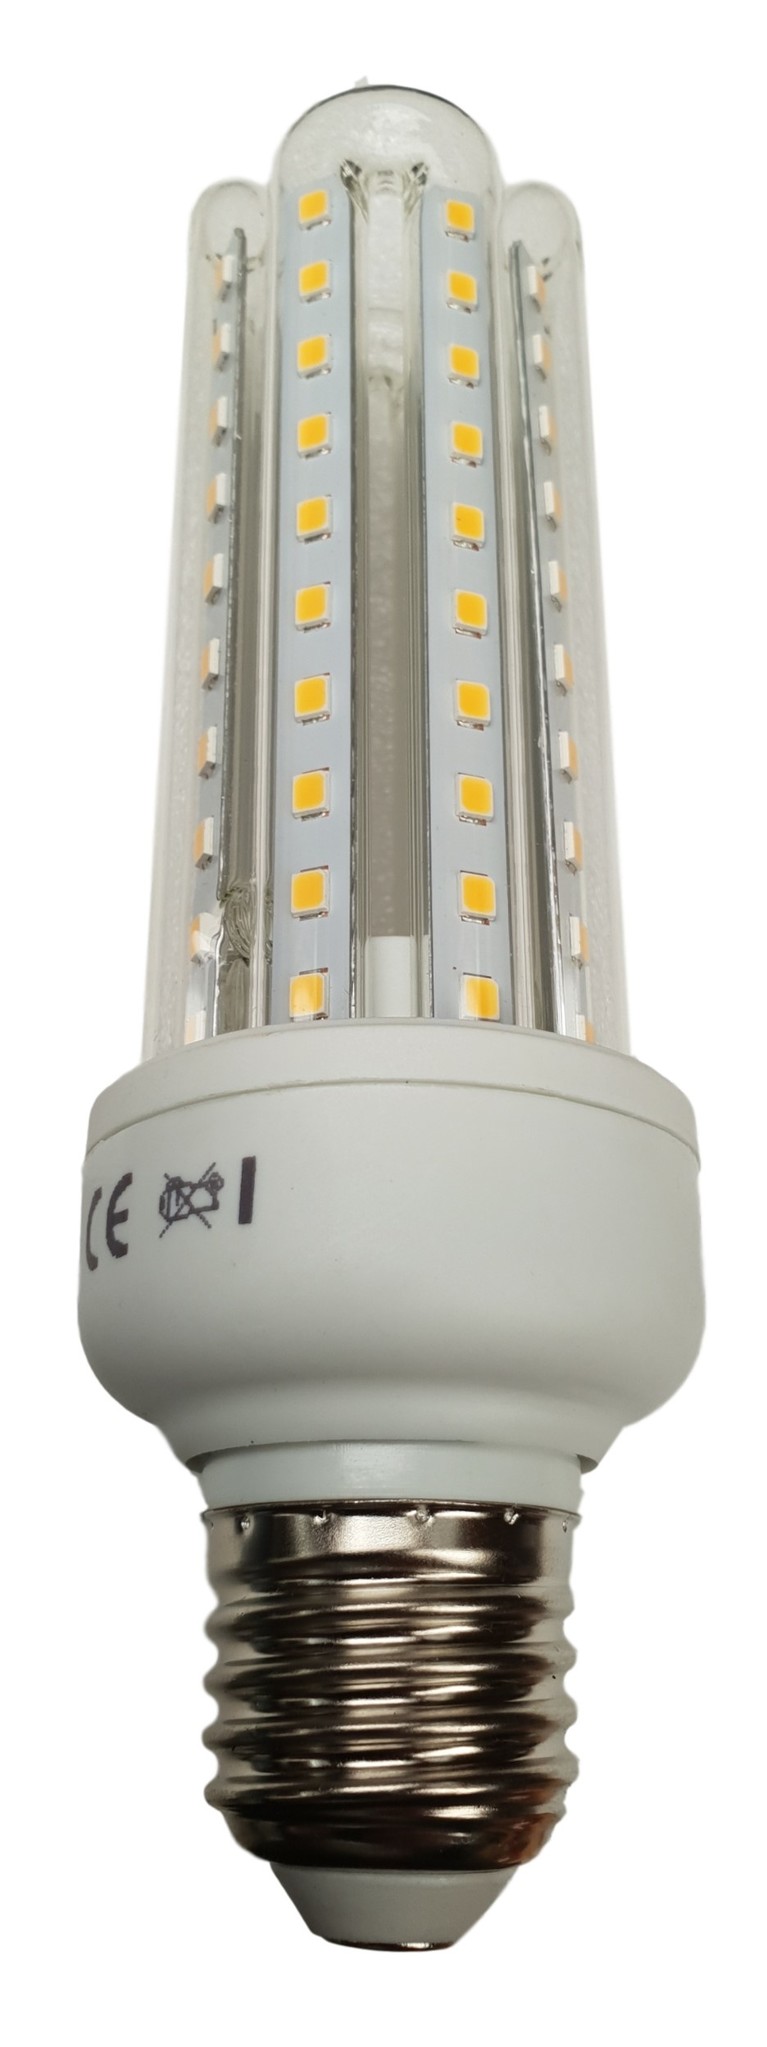 Proberen zuiverheid cafetaria Spaarlamp E27 | LED 15W=120W gloeilamp | warmwit 3000K